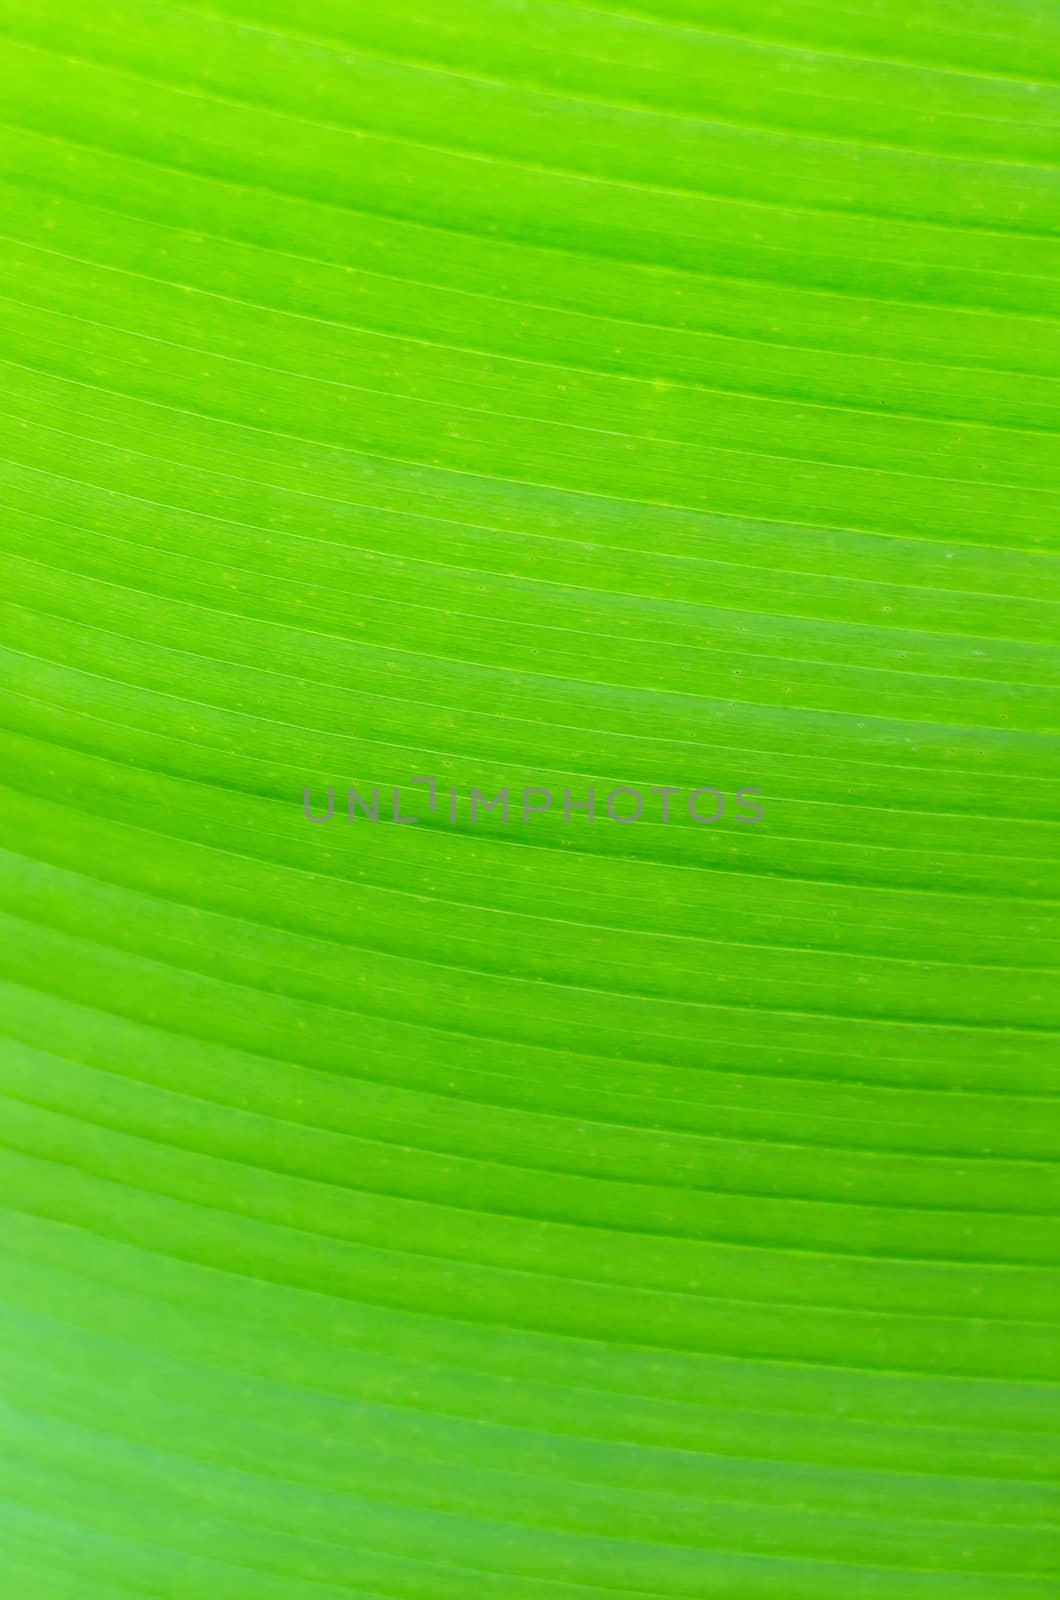 Texture background of backlight fresh green Banana Leaf.